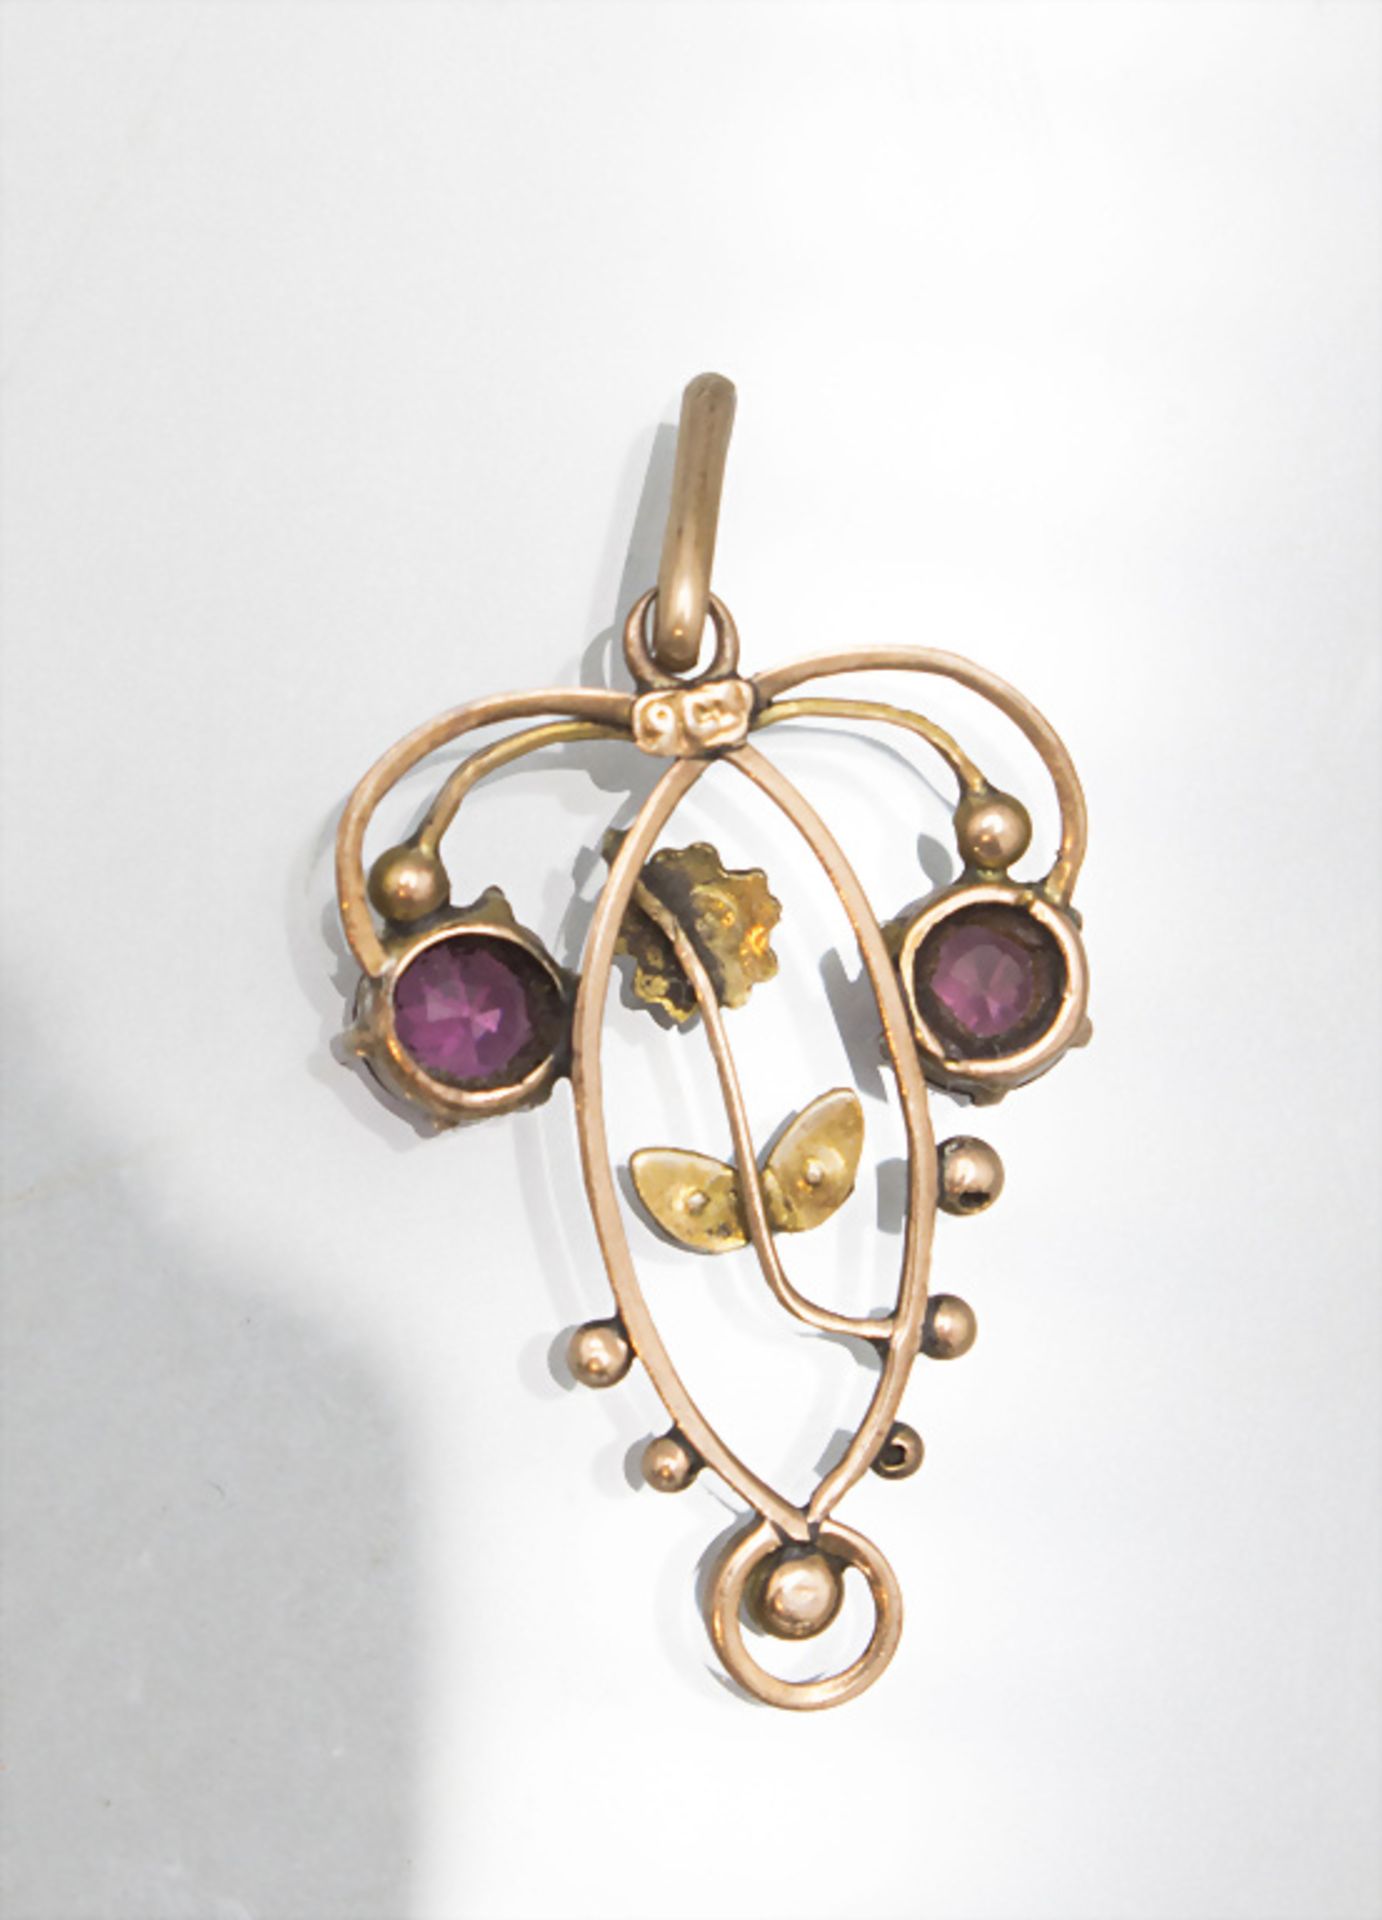 Jugendstil Anhänger mit kleiner Blüte / An Art Nouveau pendant with a small flower, England, ... - Bild 2 aus 2